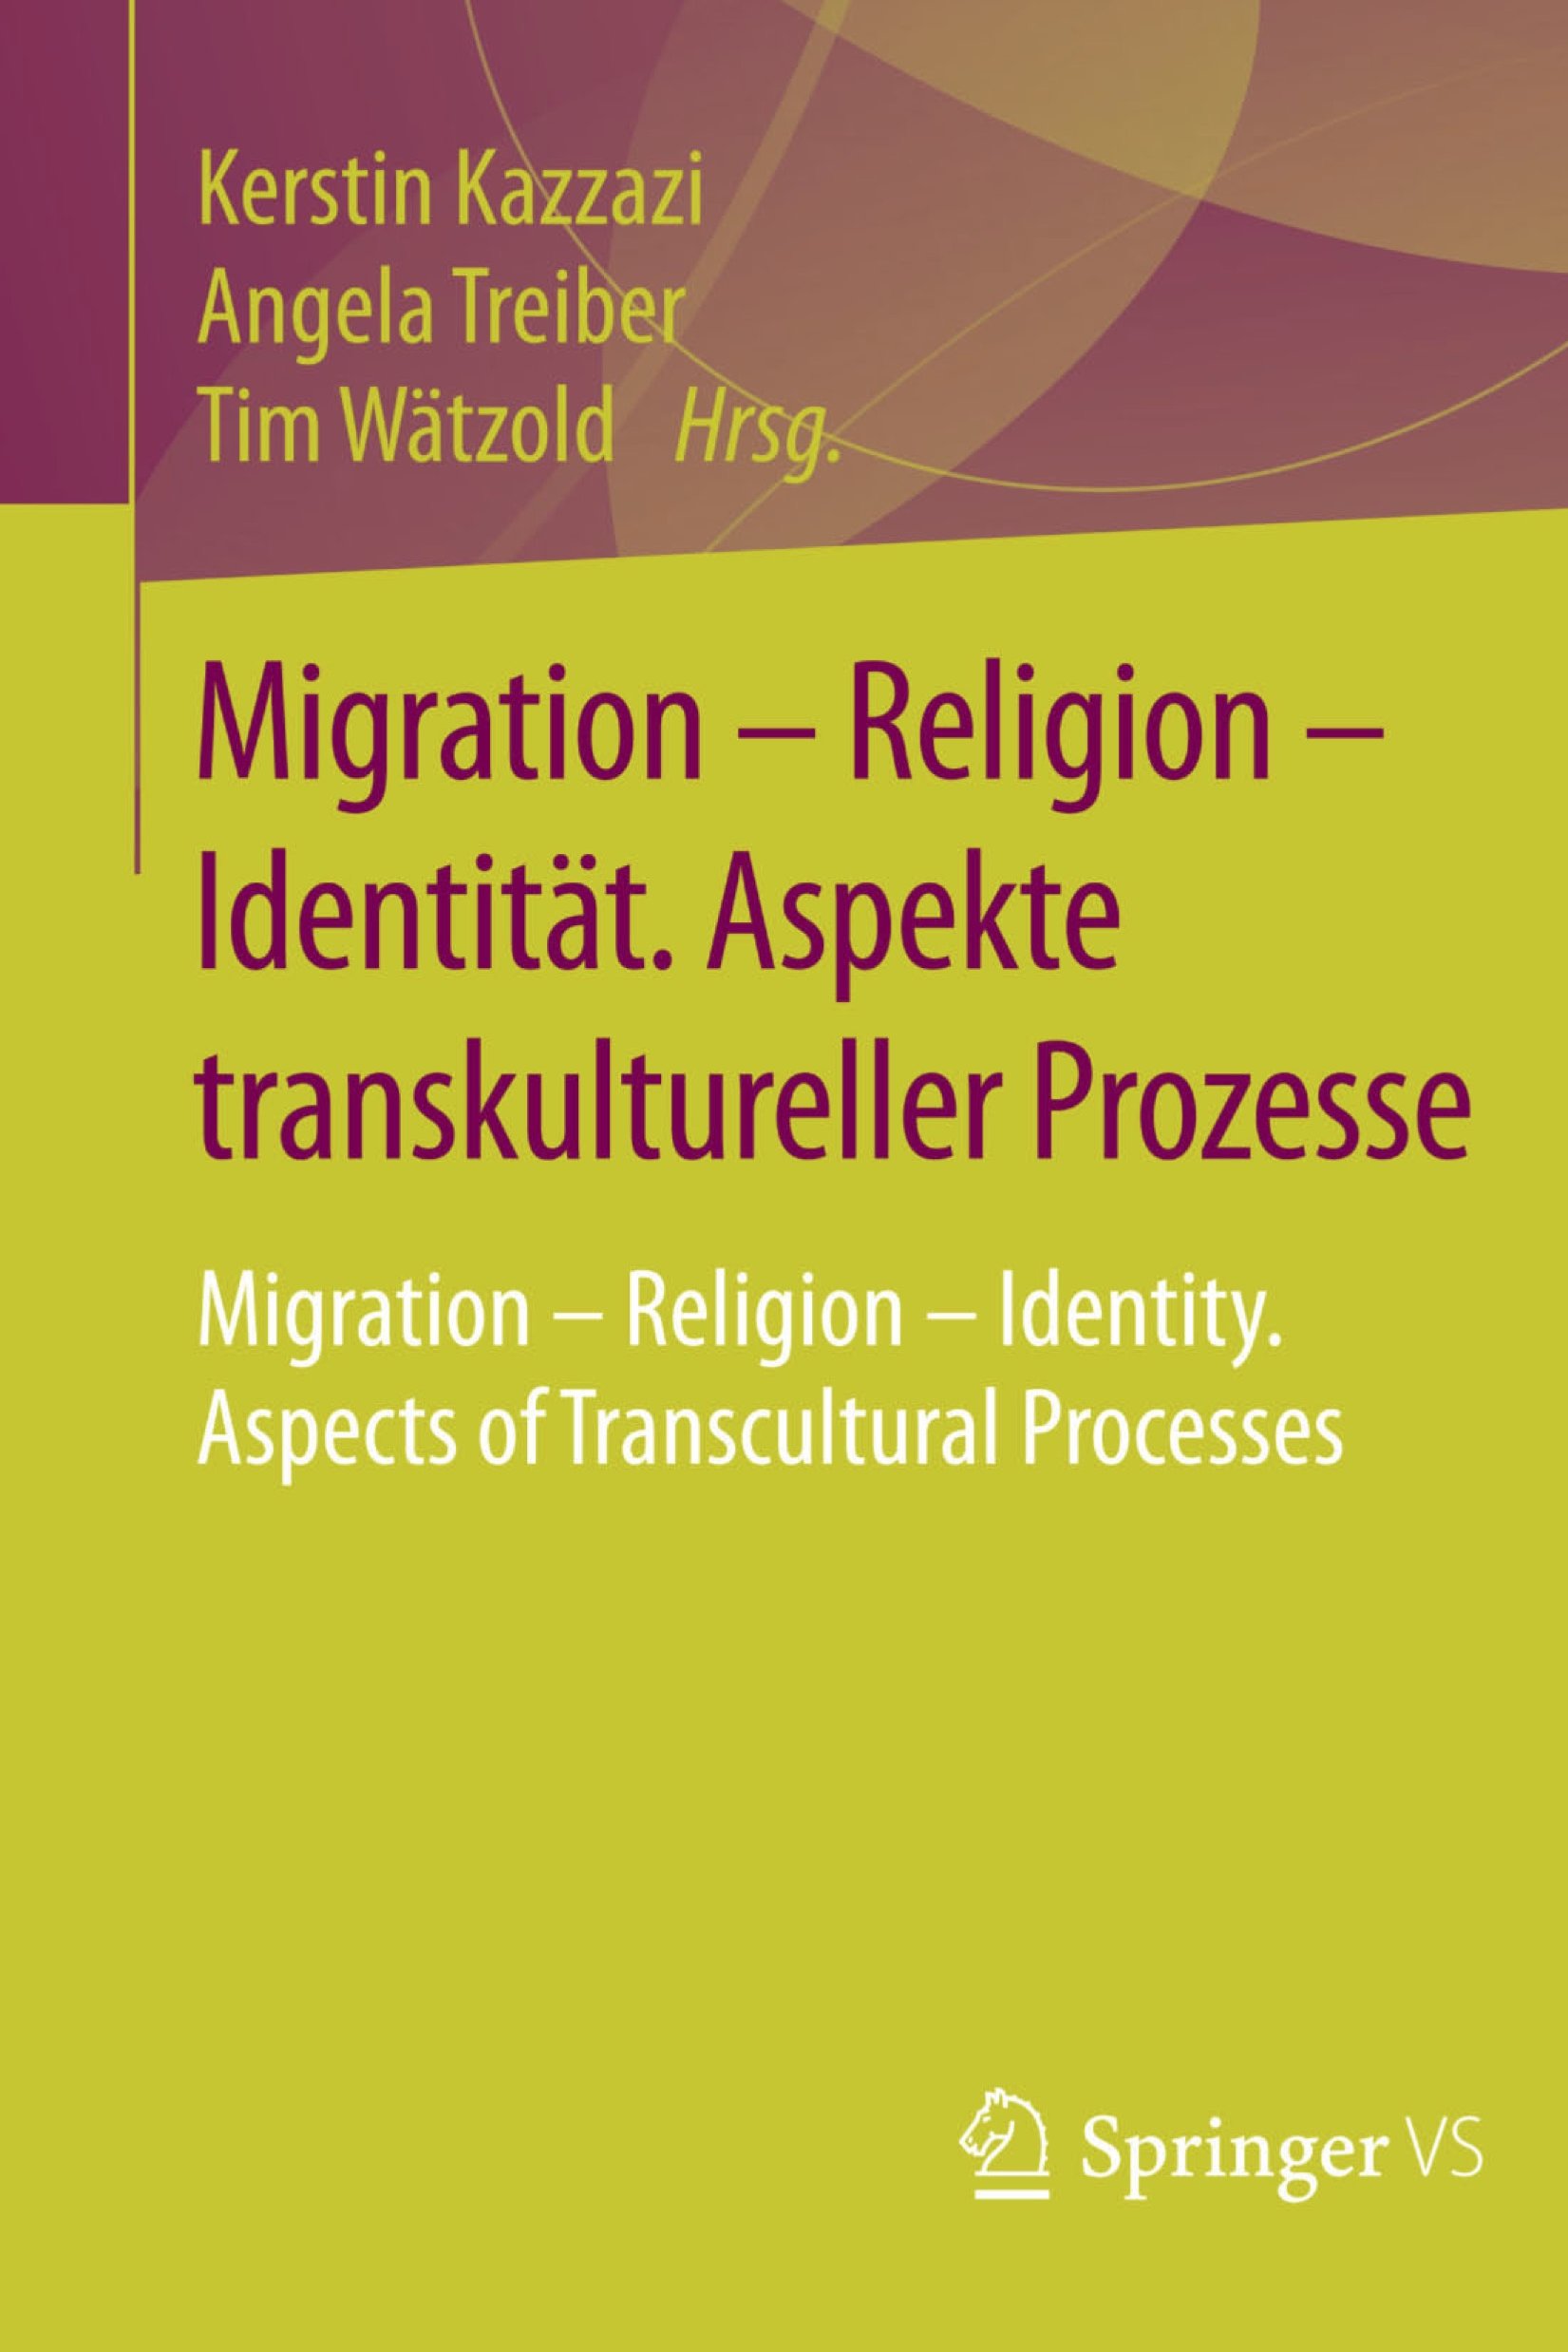 Publikation: Migration - Religion - Identität